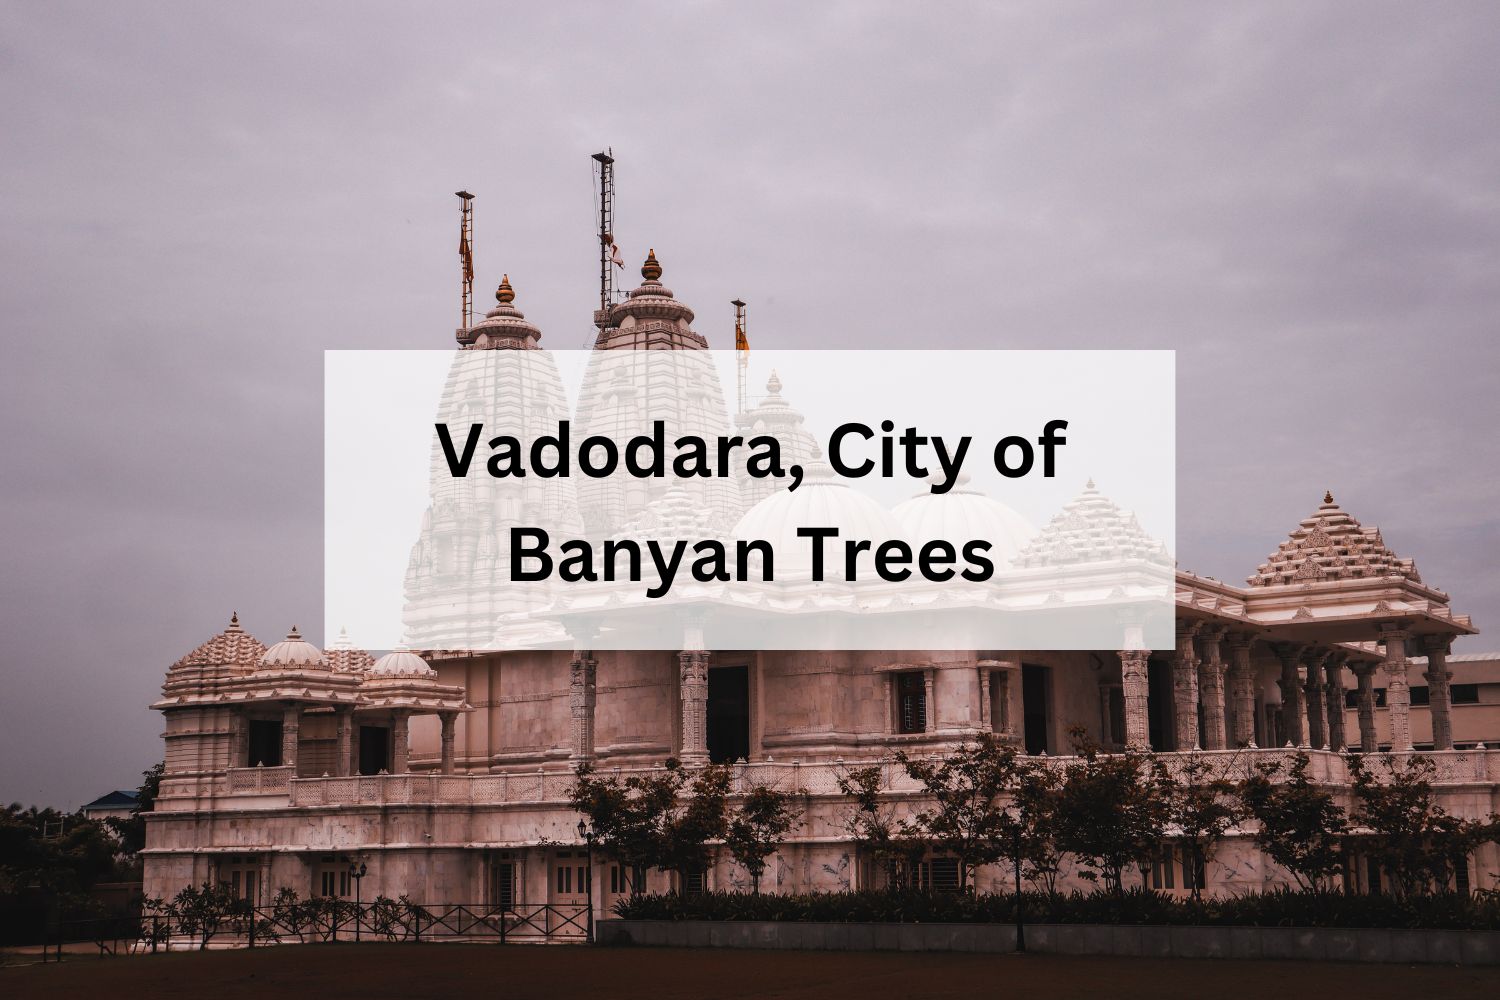 Vadodara, City of Banyan Trees